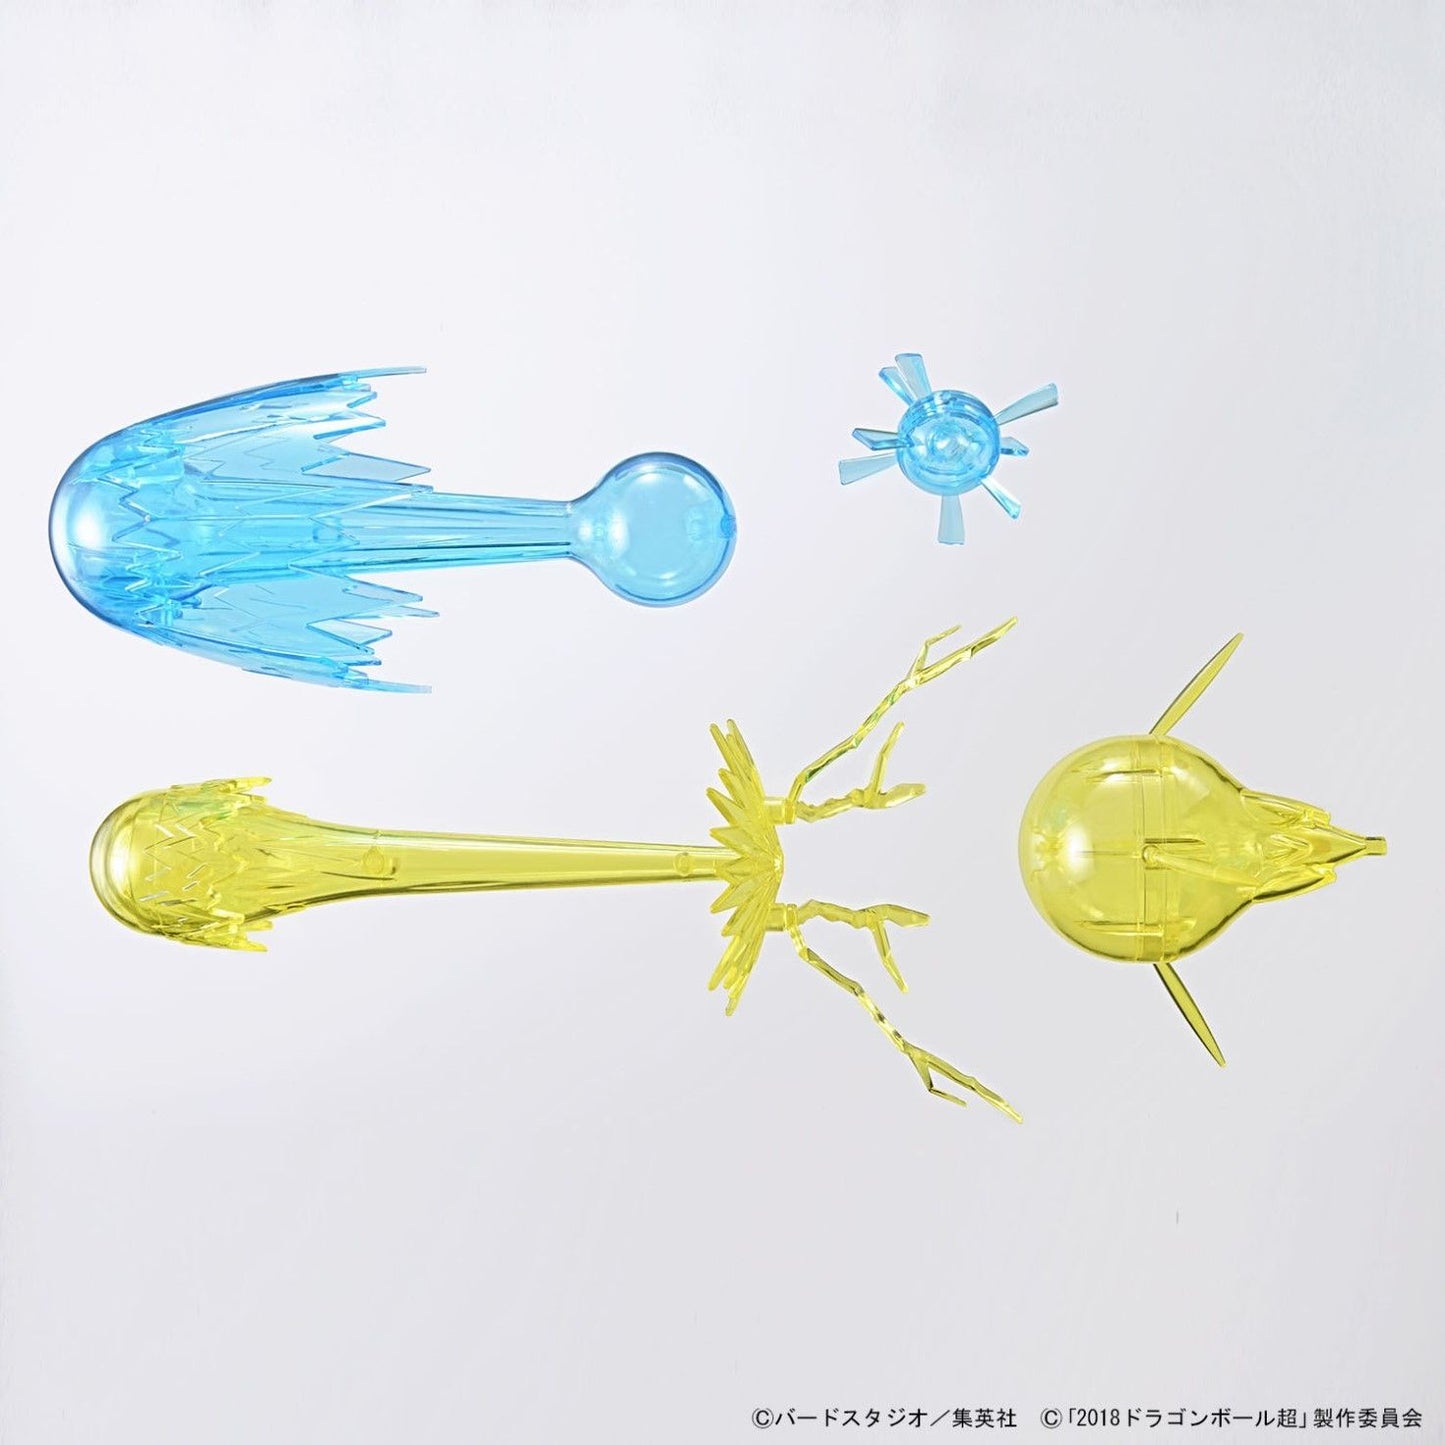 Bandai Spirits Figure - Rise Standard Super Saiyan God Super Saiyan Gogeta Dragon Ball Super Model Kit